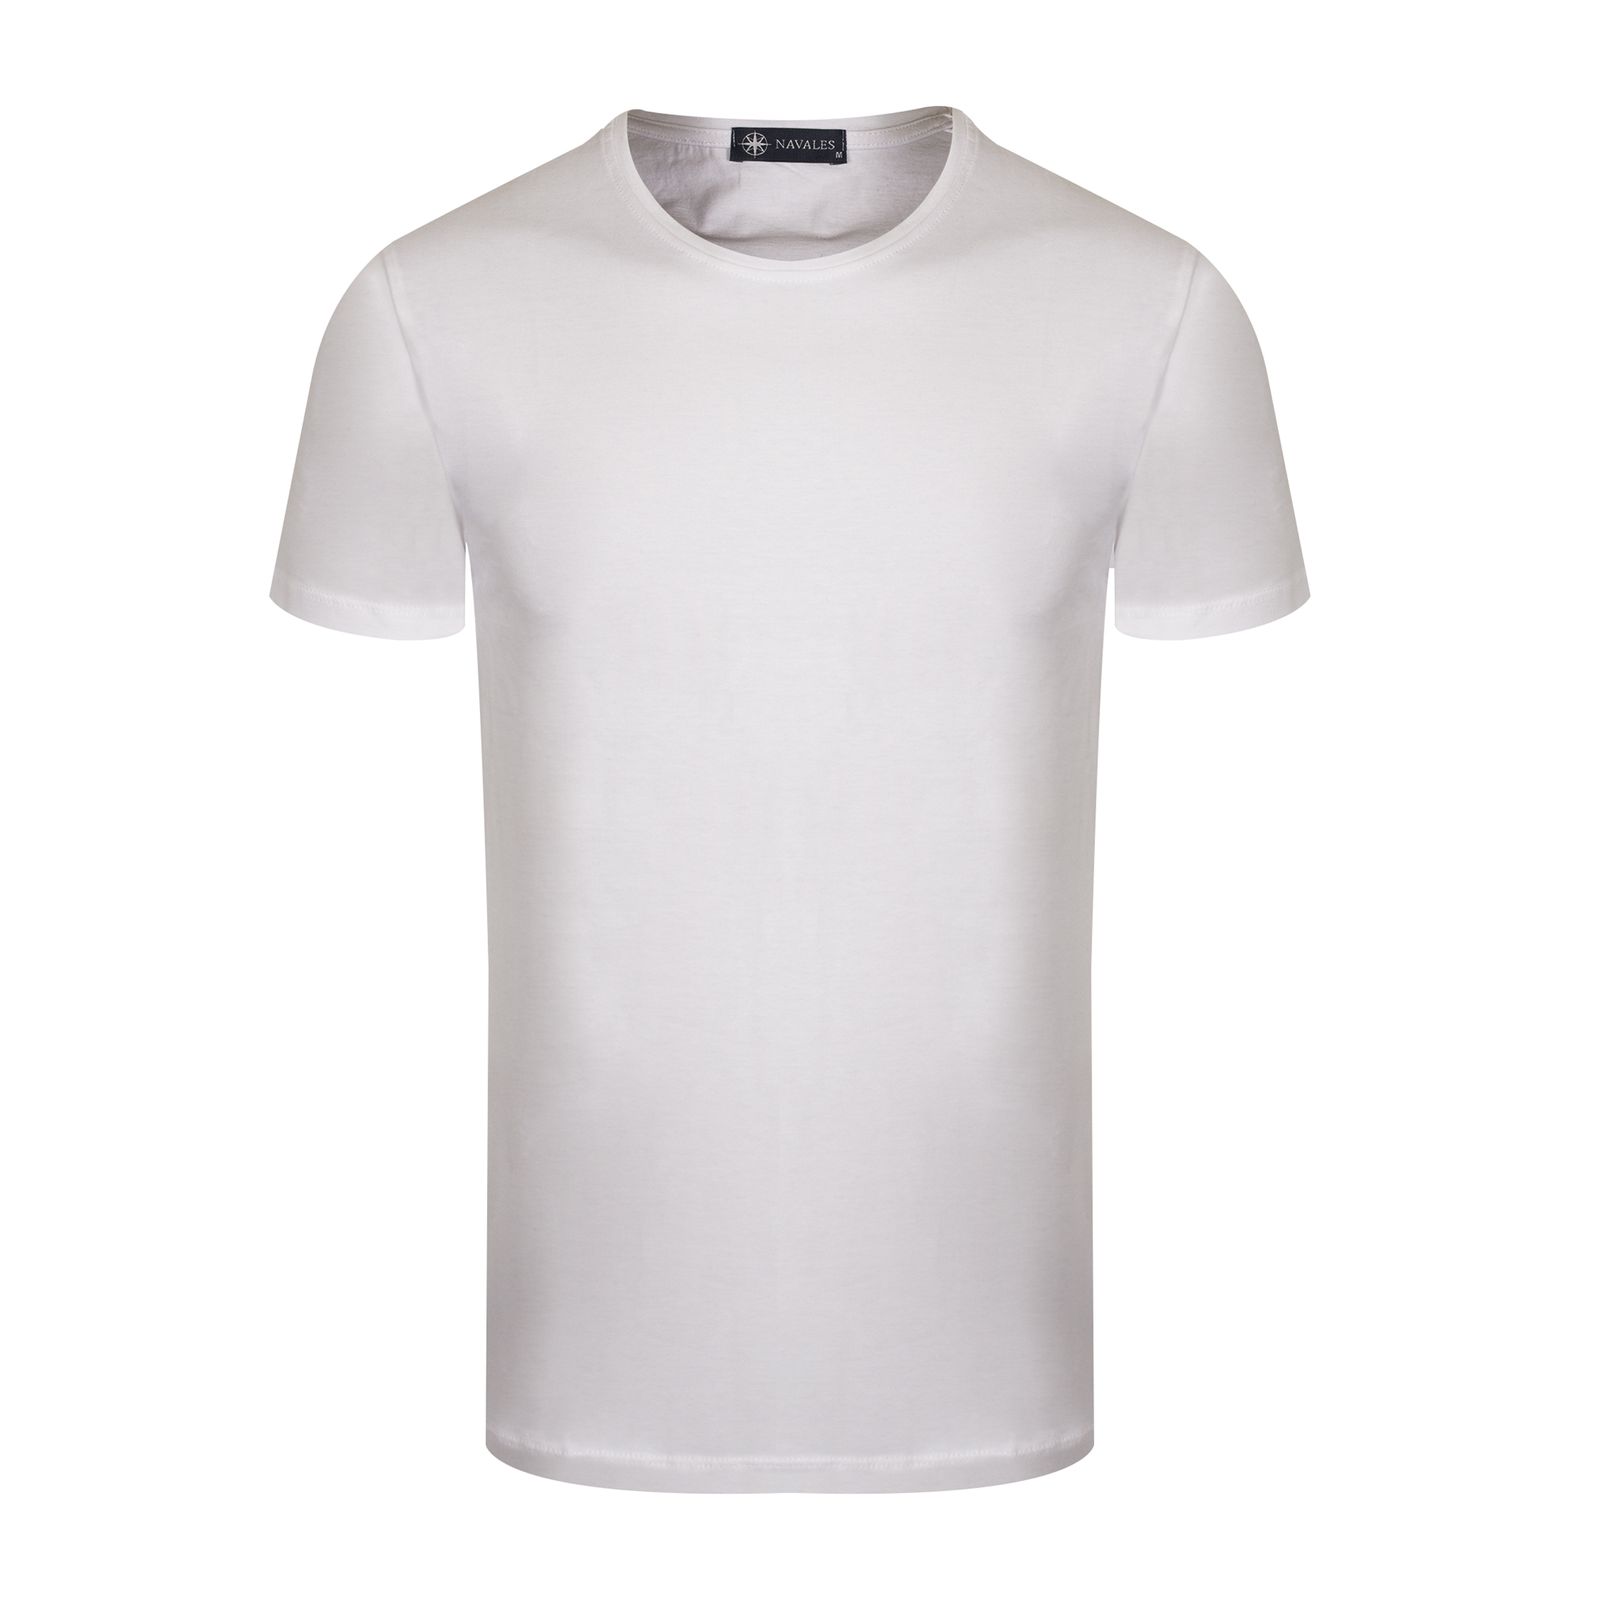 تی شرت آستین کوتاه مردانه ناوالس مدل OCEAN S S TEES رنگ سفید